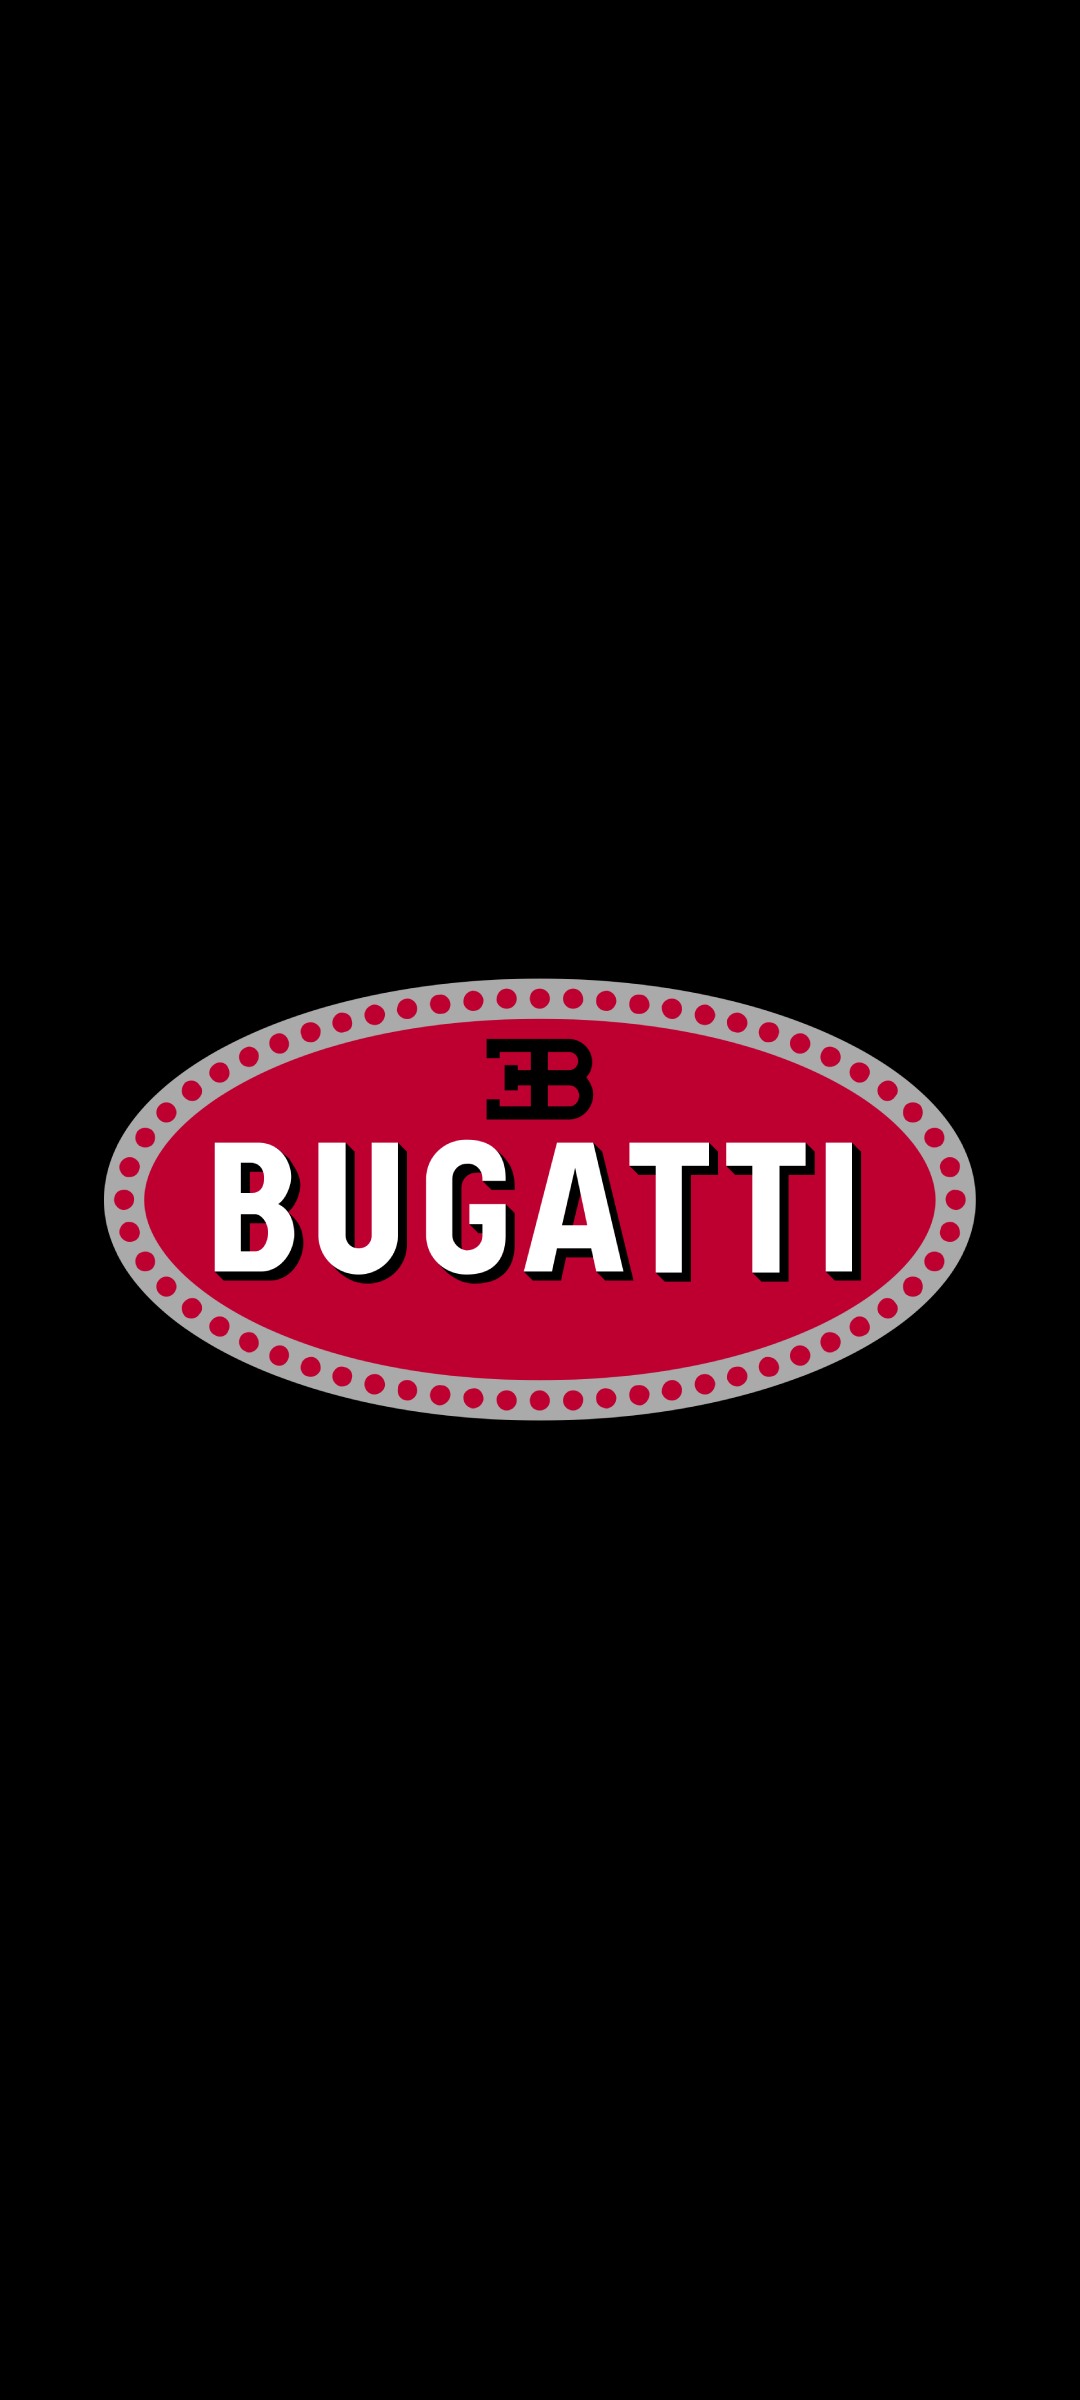 Логотип Бугатти